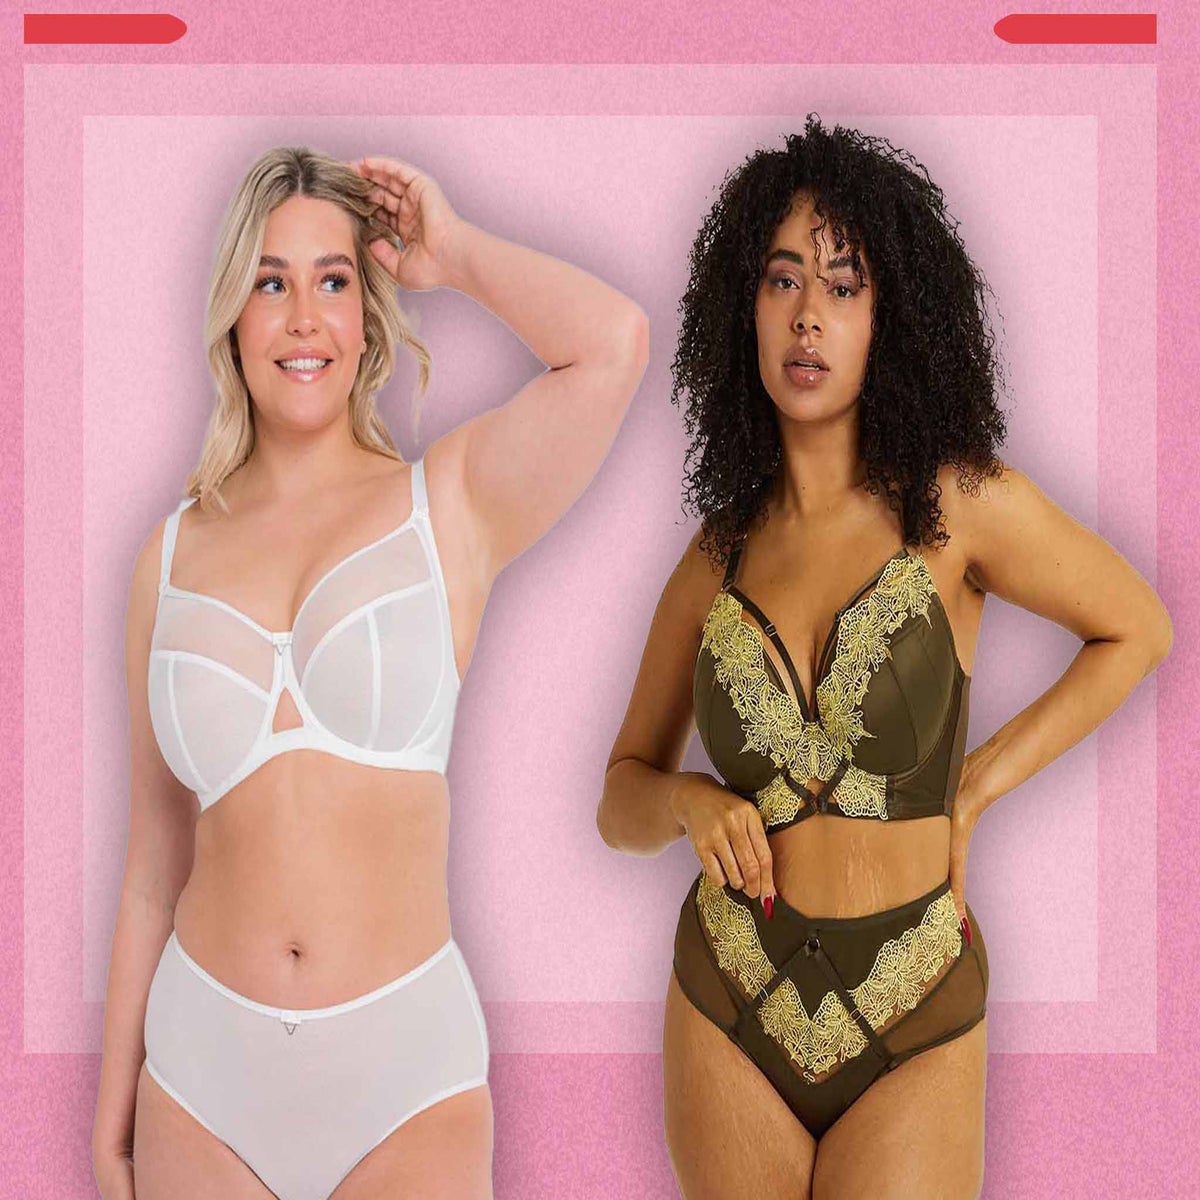 Premium Vector  Female figure type women in lingerie showing body